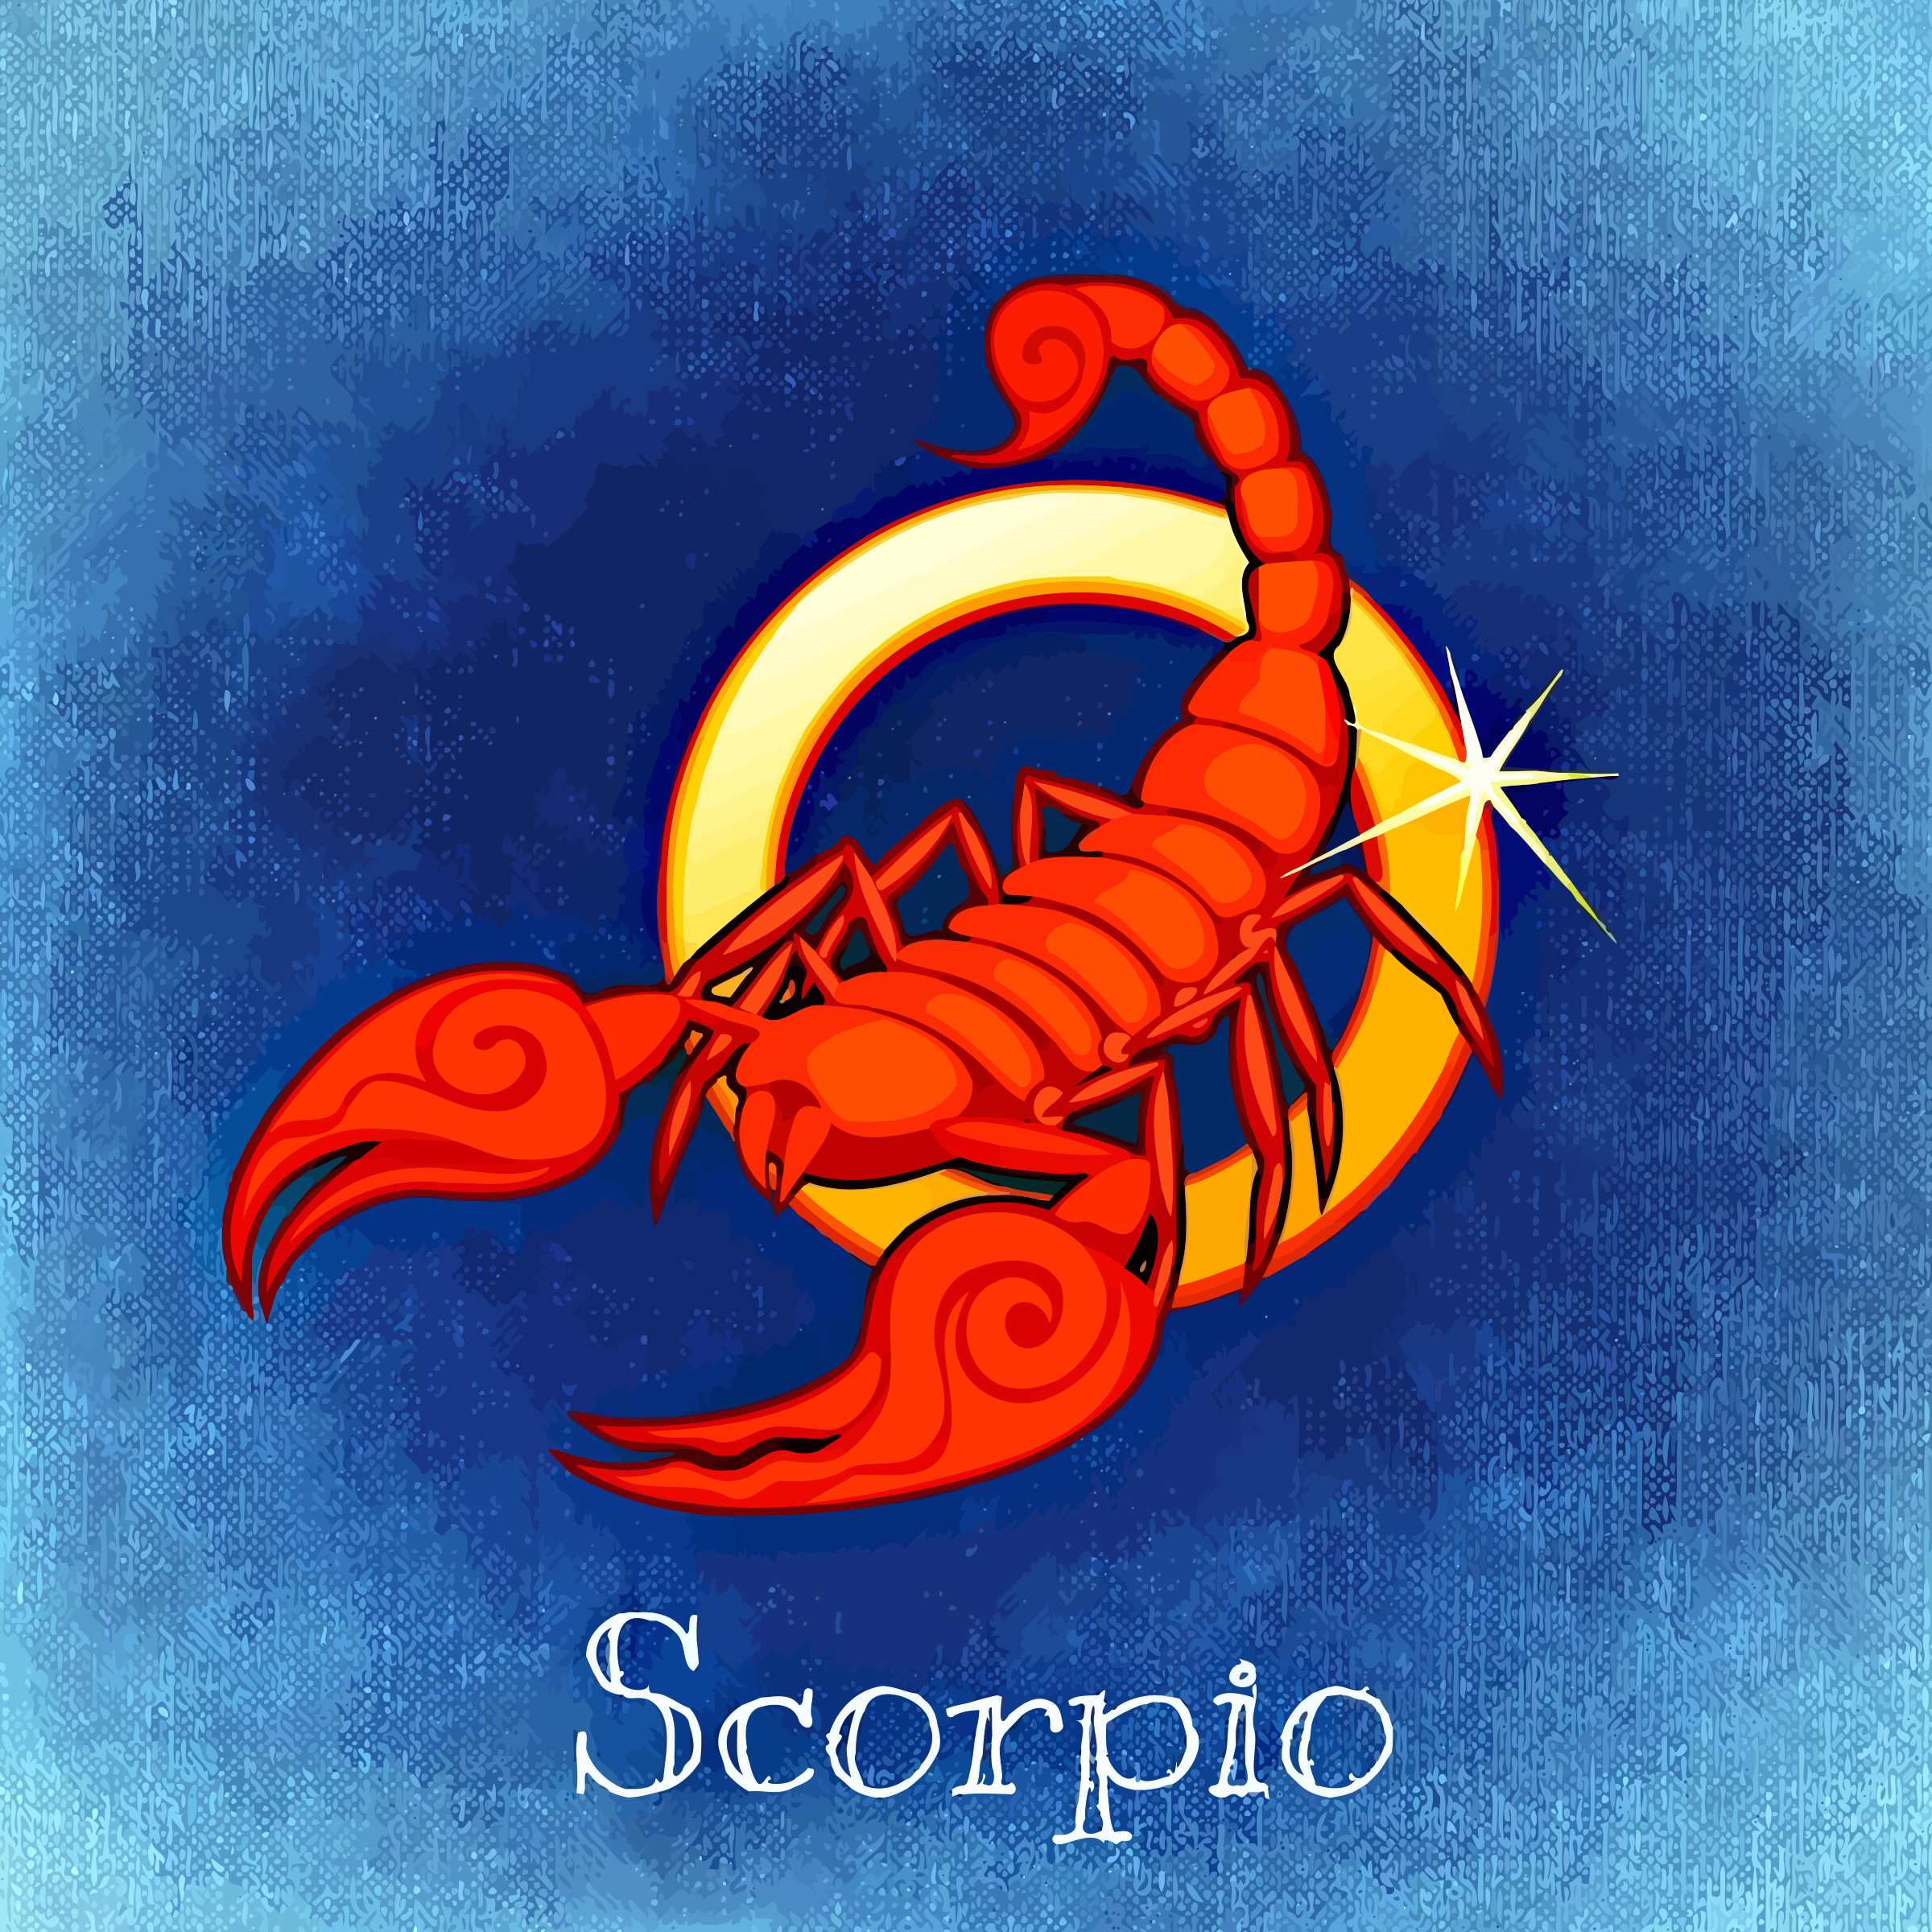 Картинка зодиака скорпион. Знак зодиака Скорпион. Скорпион знак зодиака Скорпион. Скорпион знак зодиака символ. Скорпион рисунок.